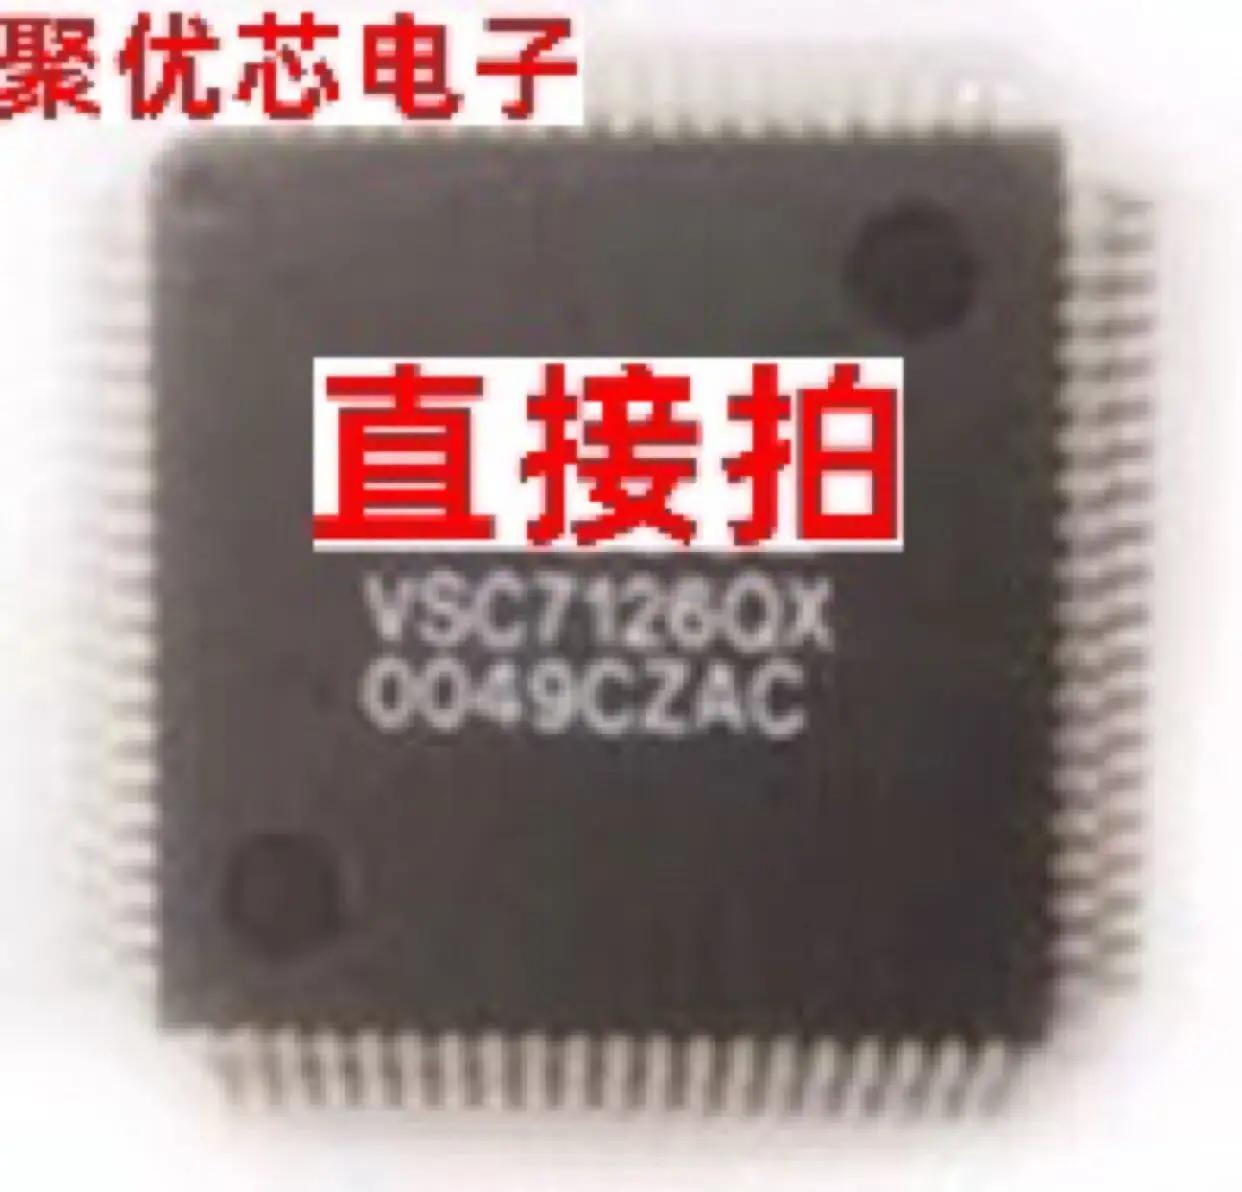 VSC7126QX VSC7126 IC